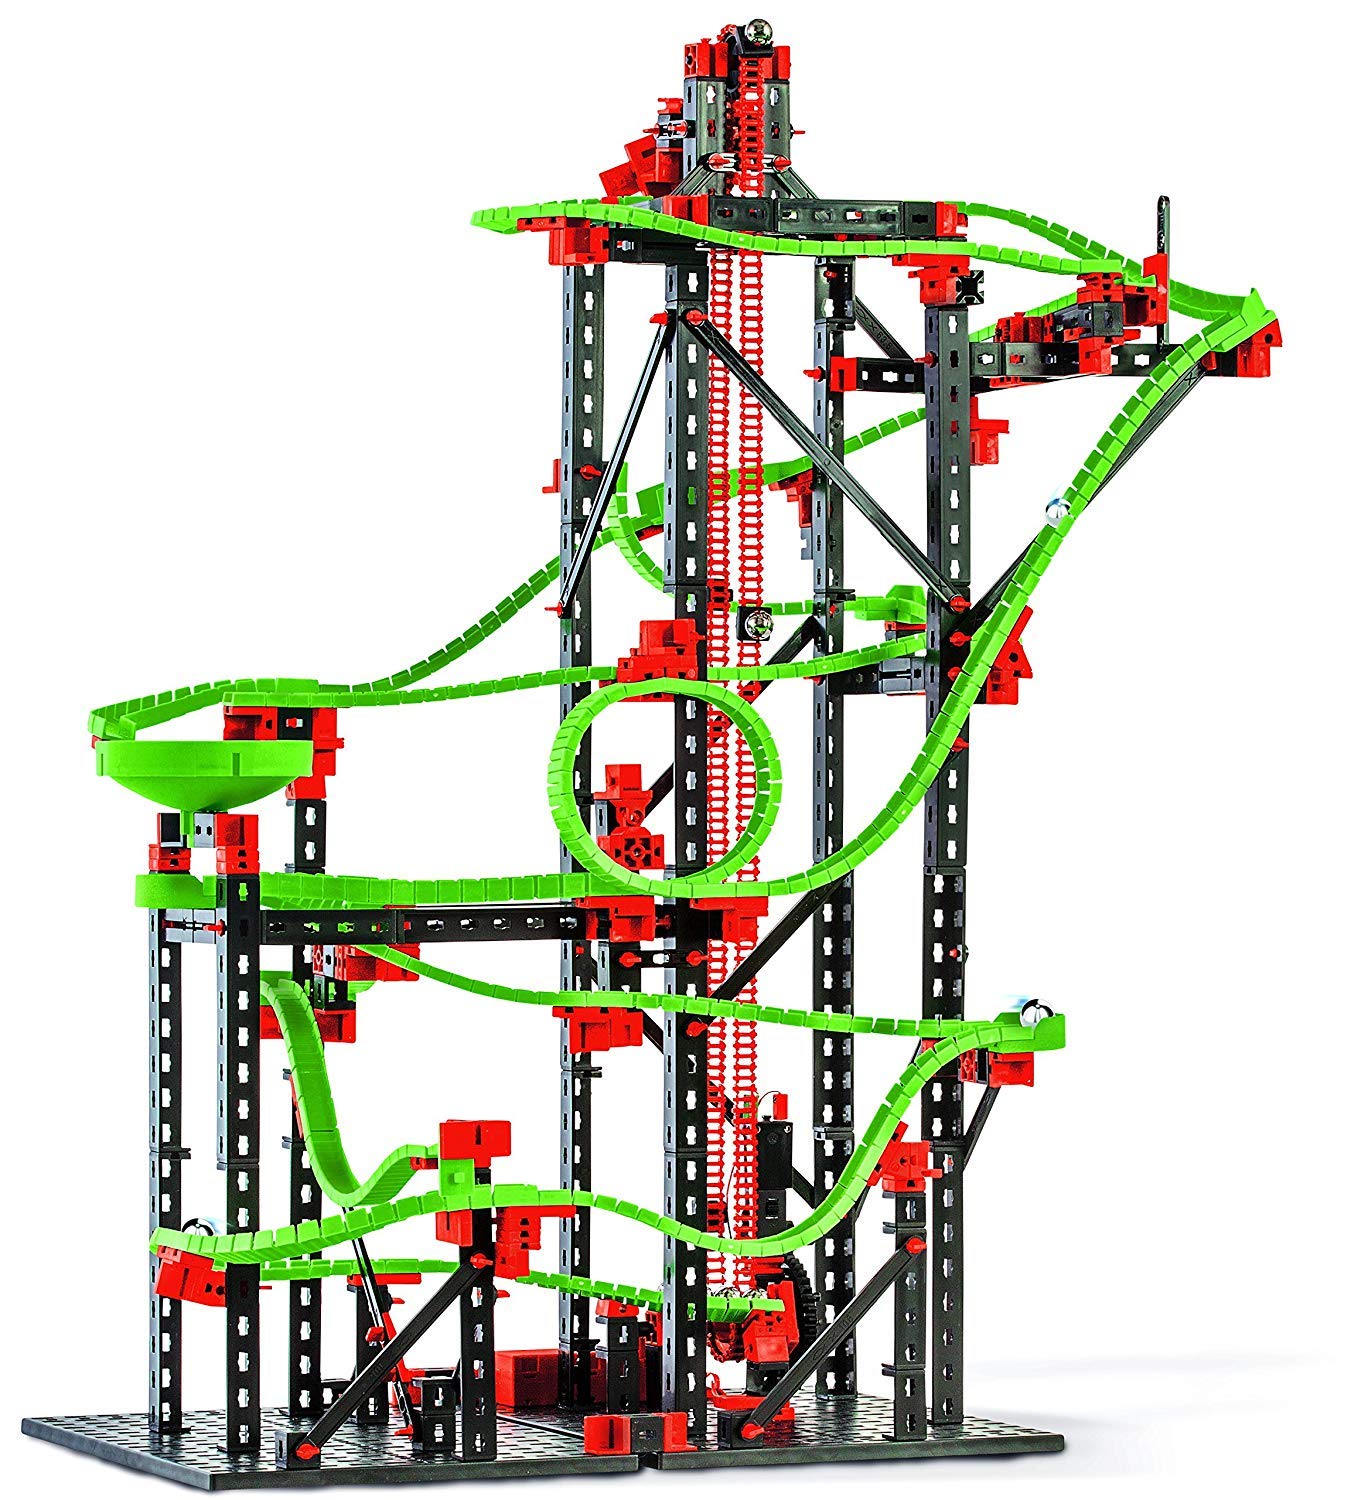 Fischertechnik Dynamic L Construction Toy